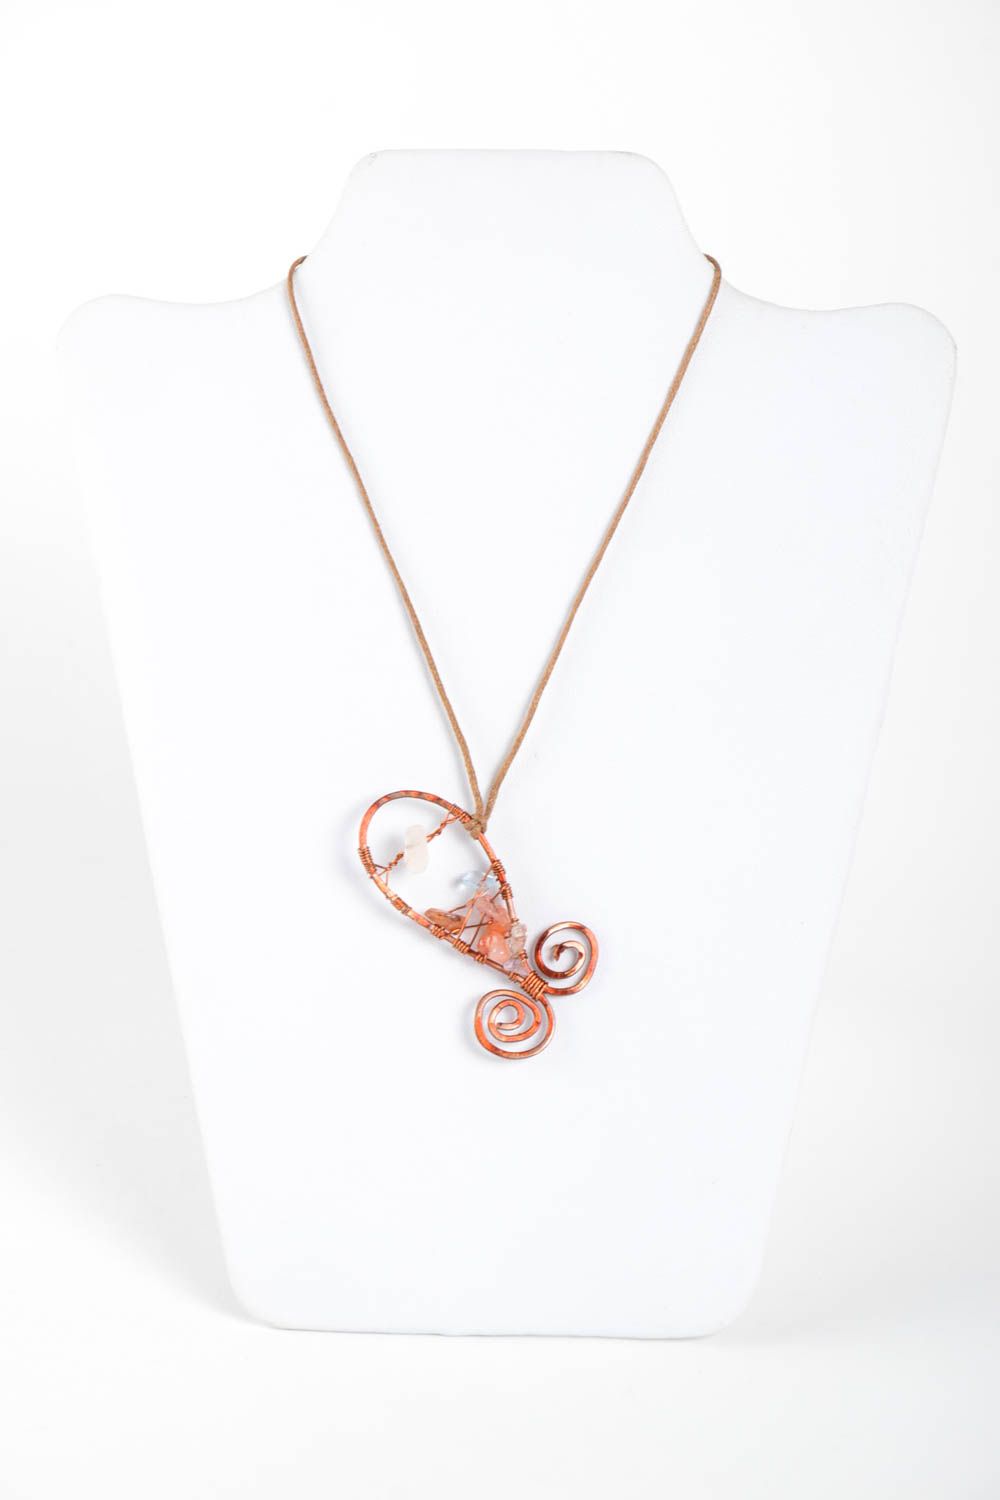 Handmade pendant unusual pendant designer accessory copper pendant gift ideas photo 2